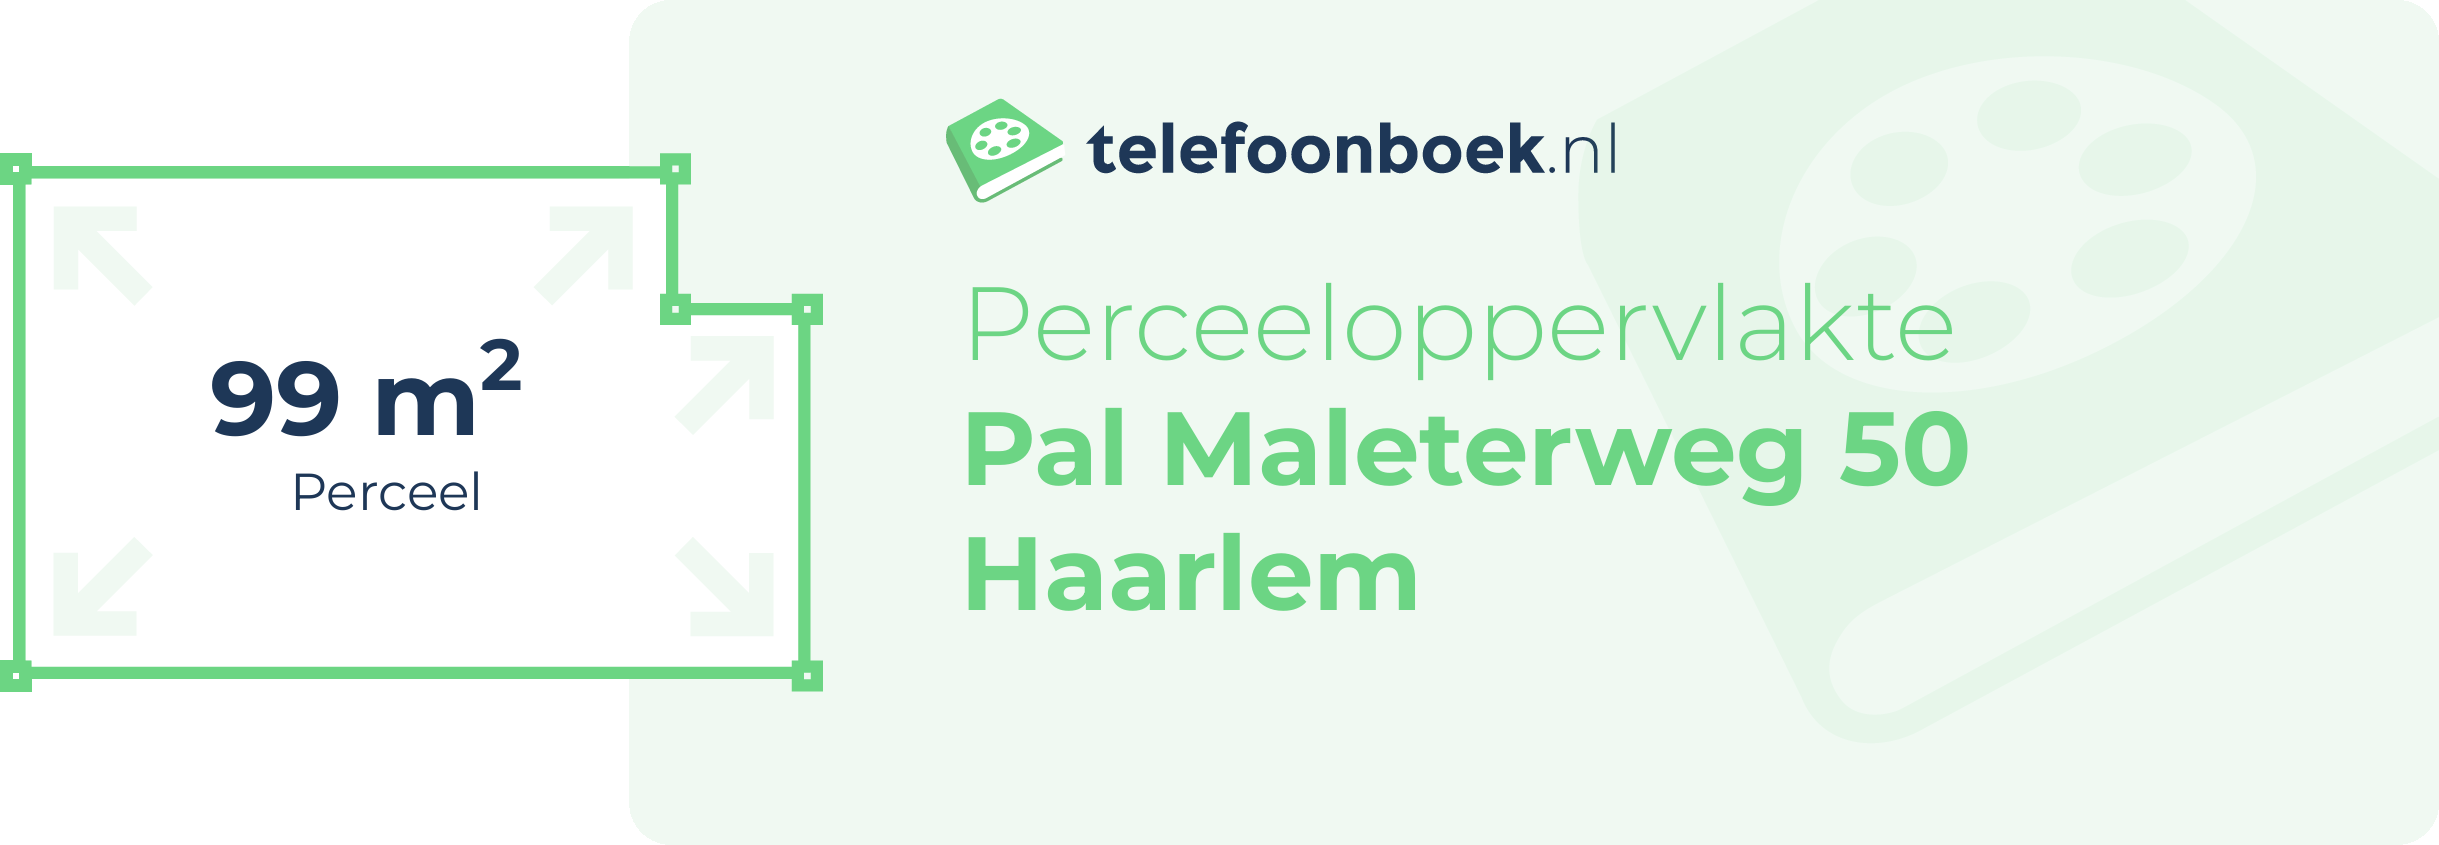 Perceeloppervlakte Pal Maleterweg 50 Haarlem